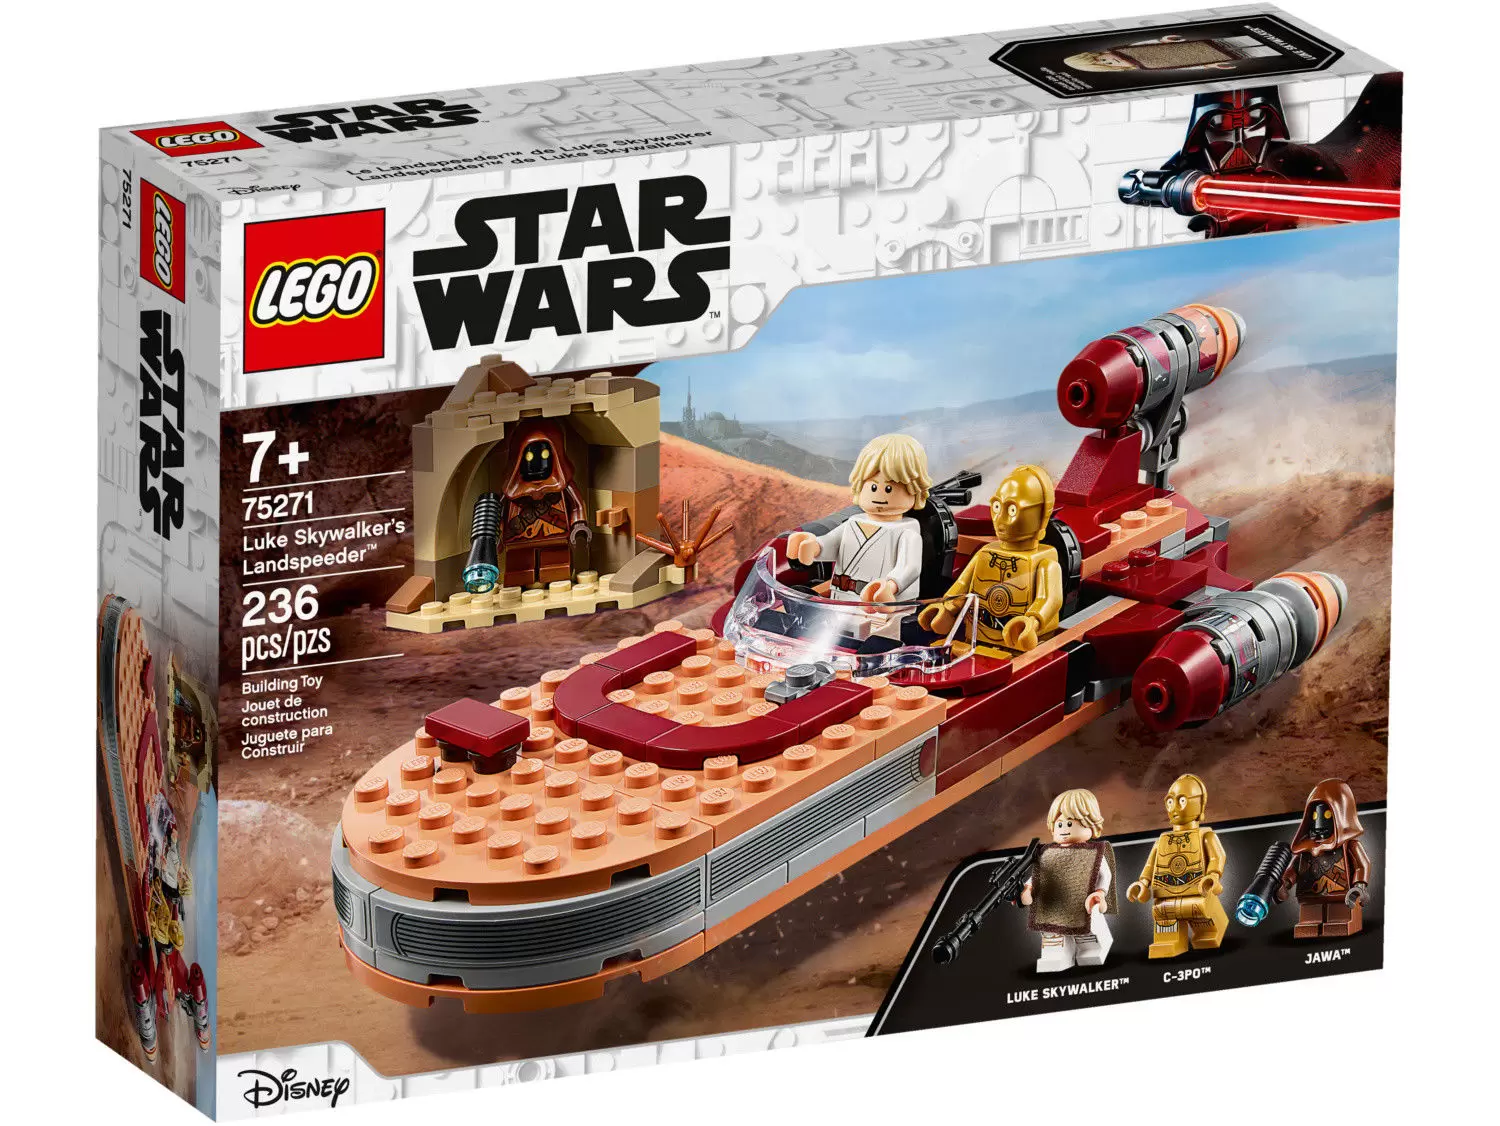 mosaik turnering en milliard Luke Skywalker's Landspeeder - LEGO Star Wars set 75271